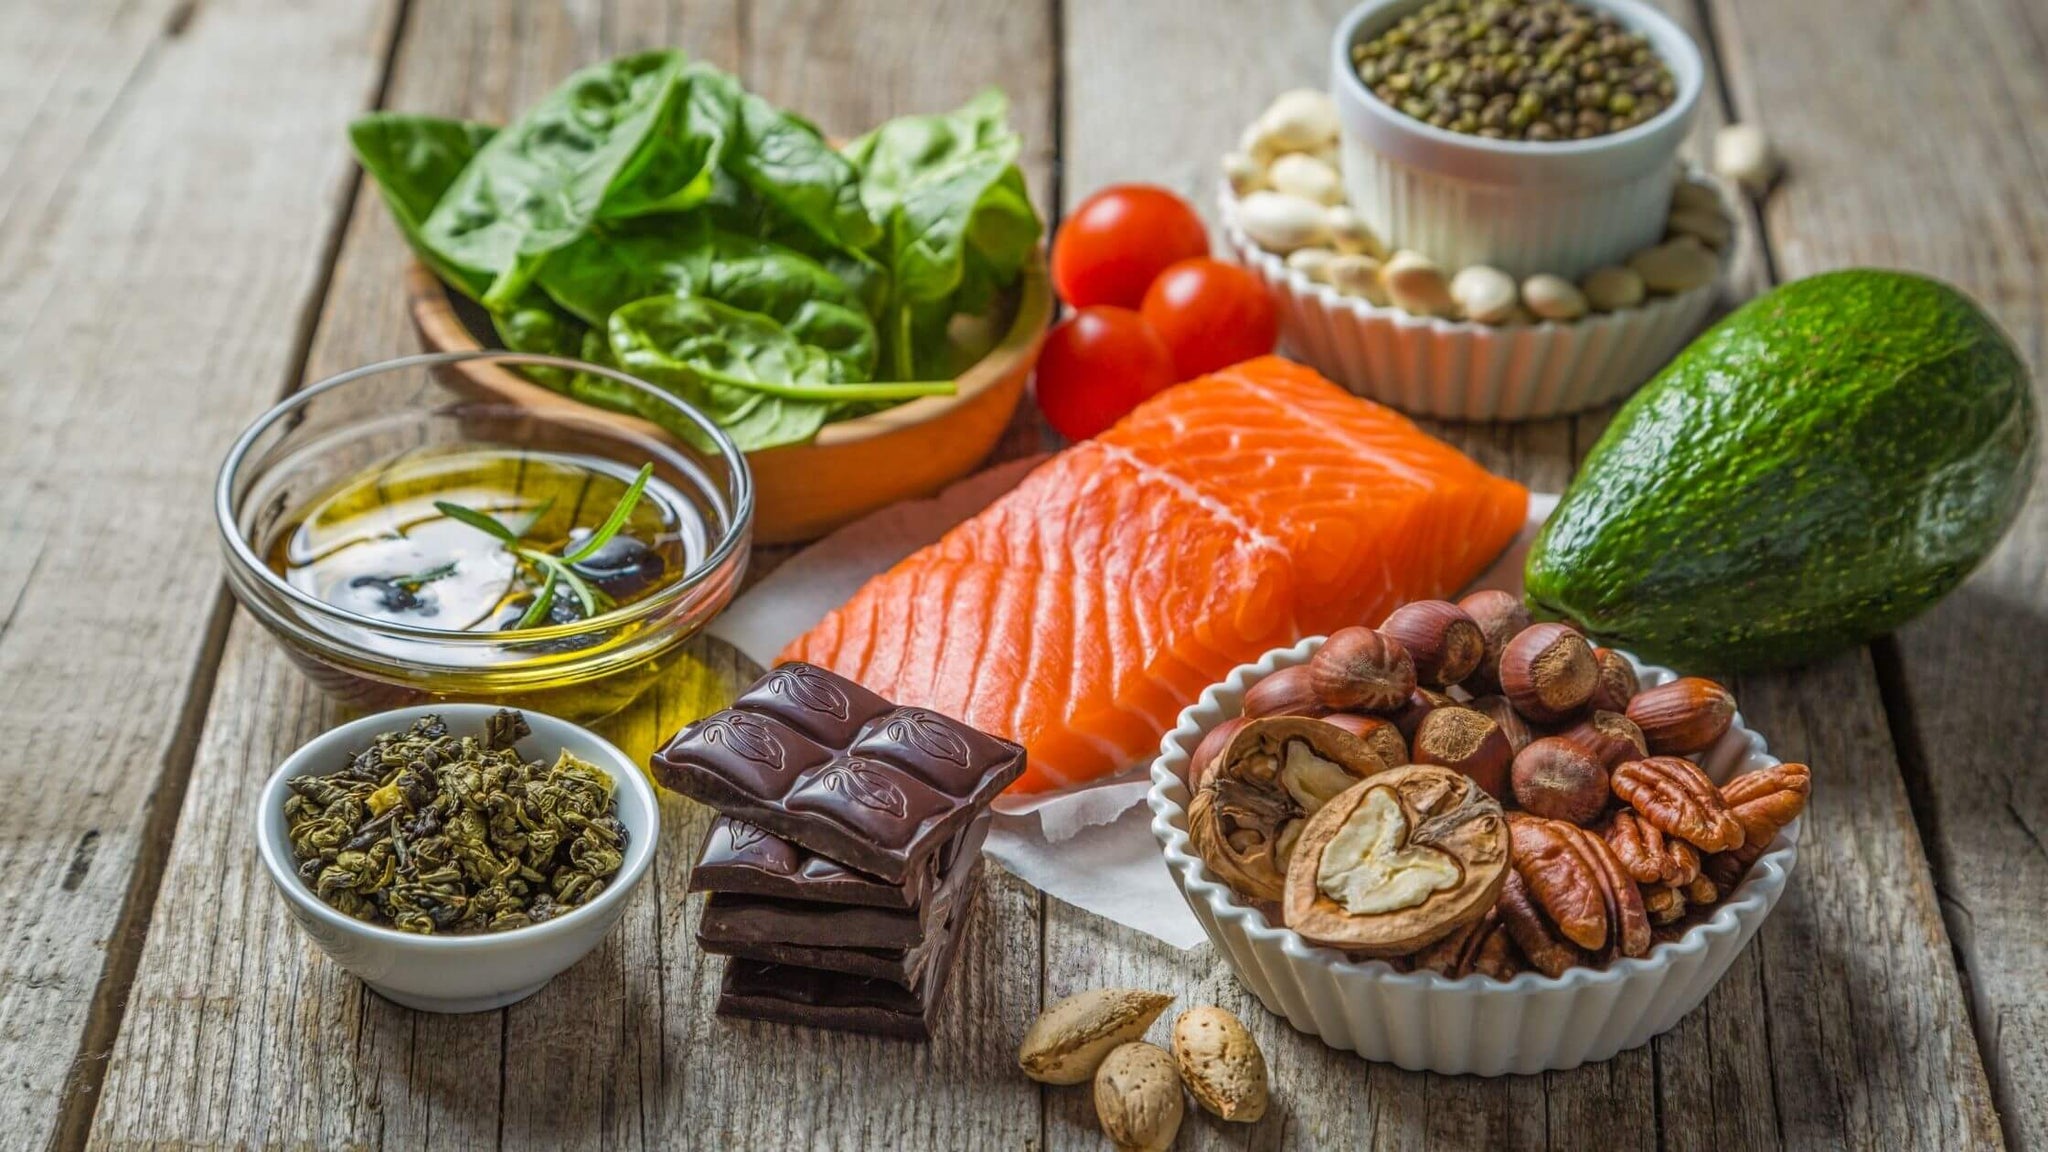 Food as Medicine: A Holistic Approach to Health